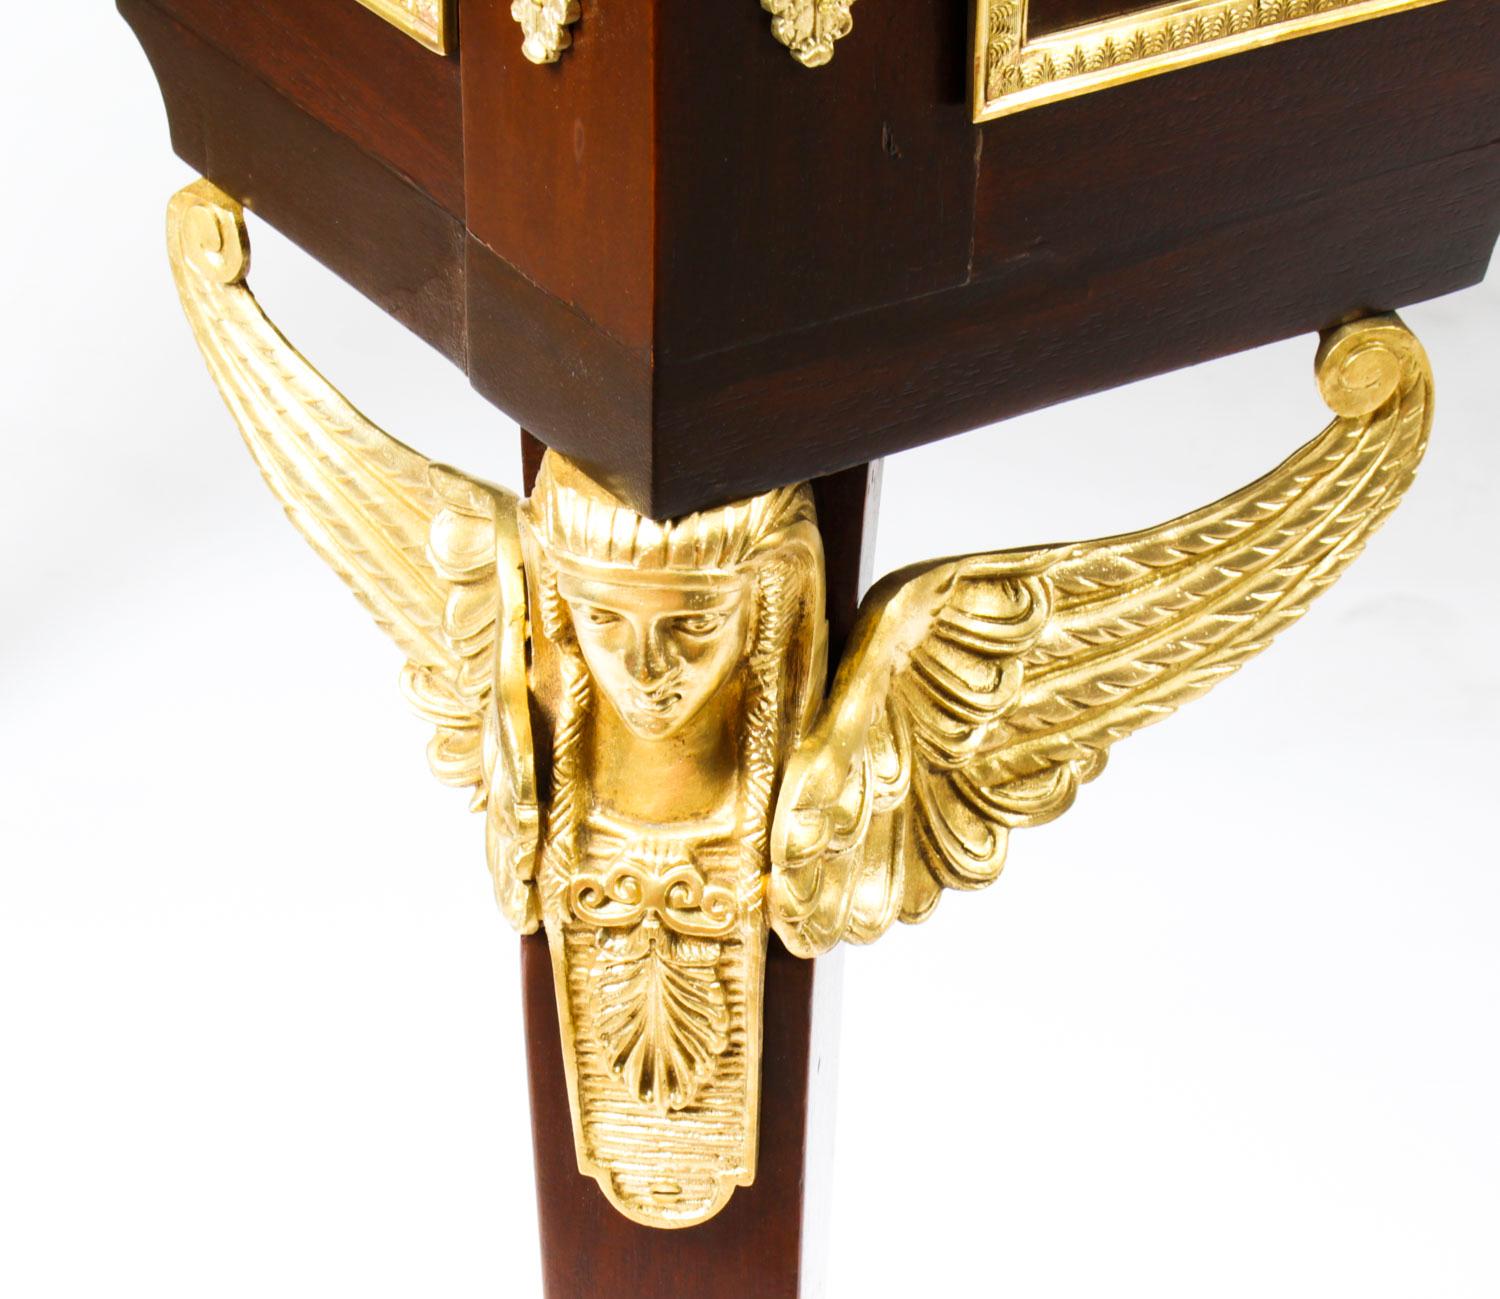 Antique Monumental French Empire Bureau Plat Desk Writing Table, 19th Century For Sale 1